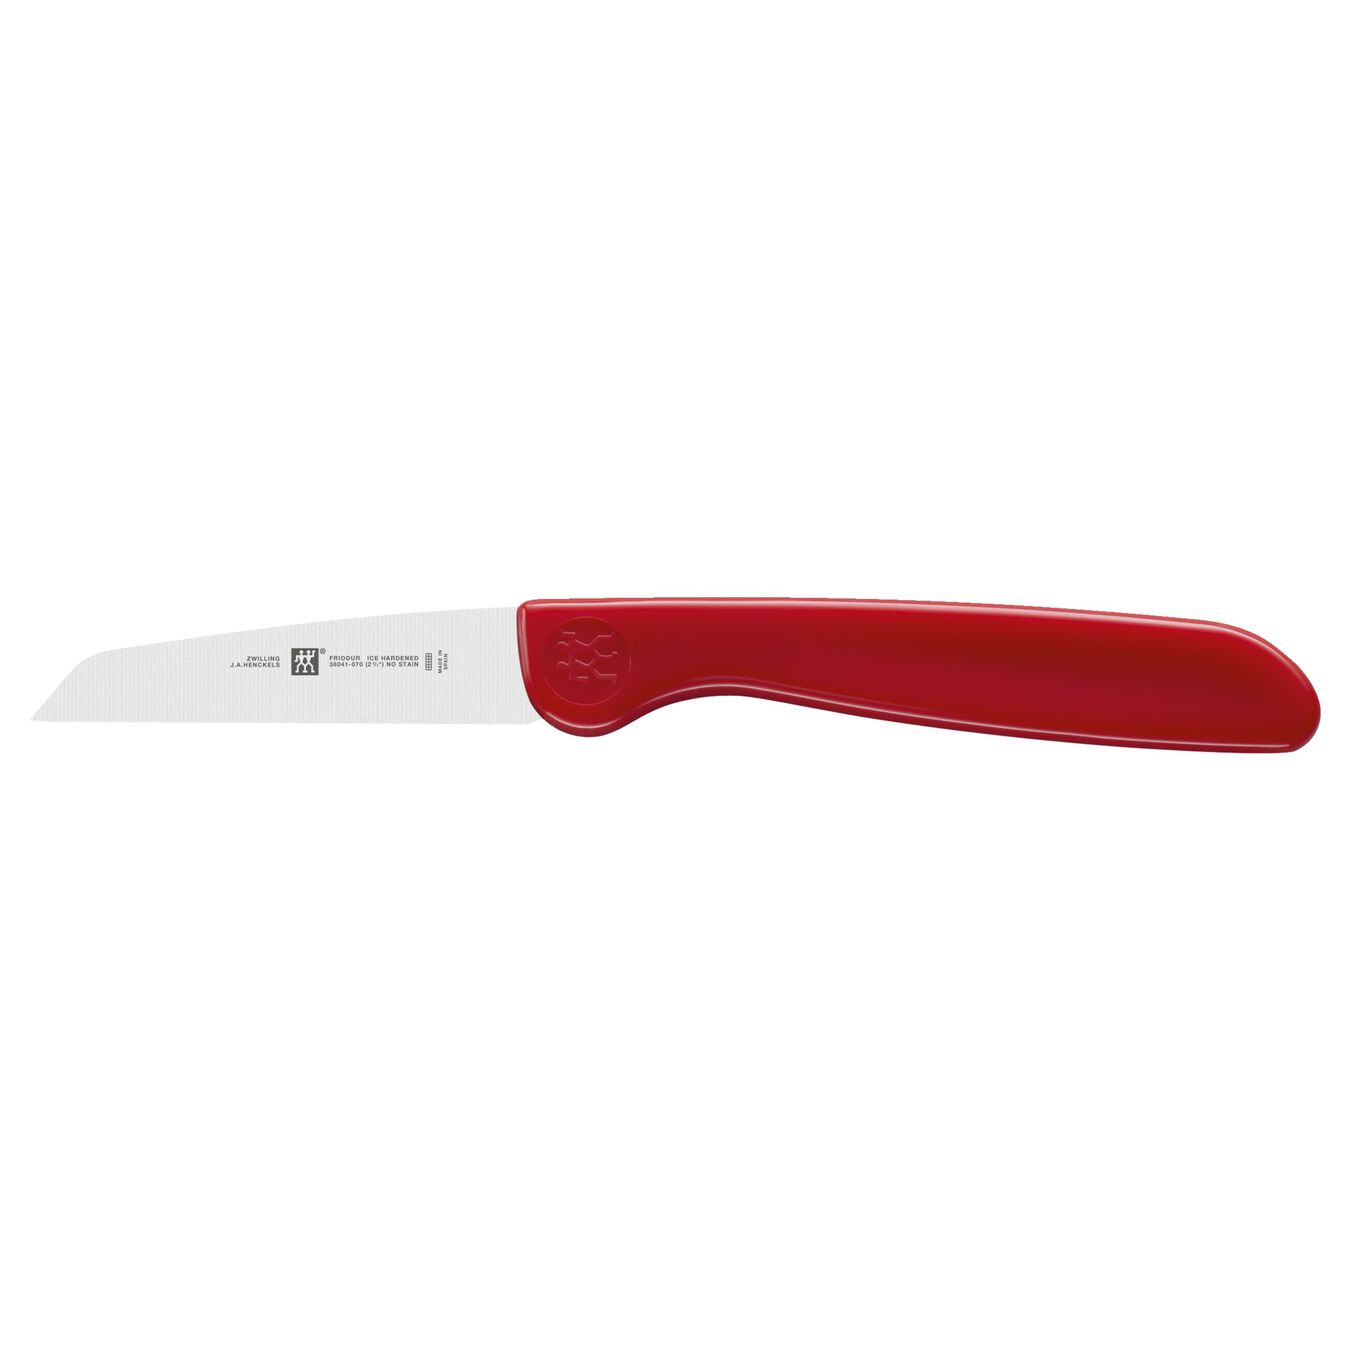 Grøntsagskniv 7 cm, Red,,large 1